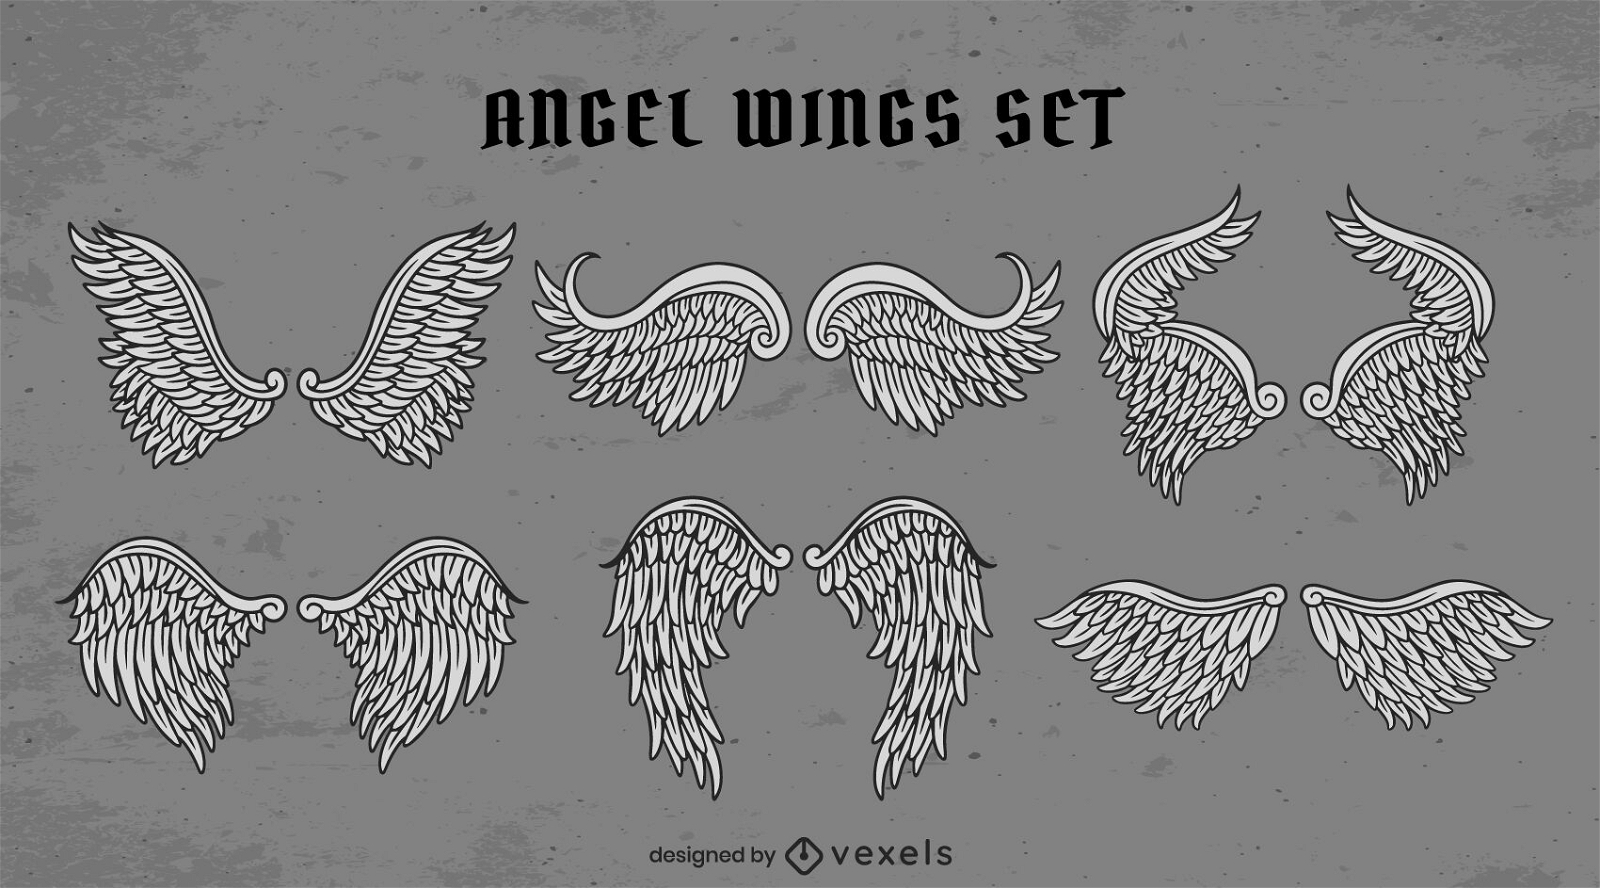 Fantasy angel wings elements set